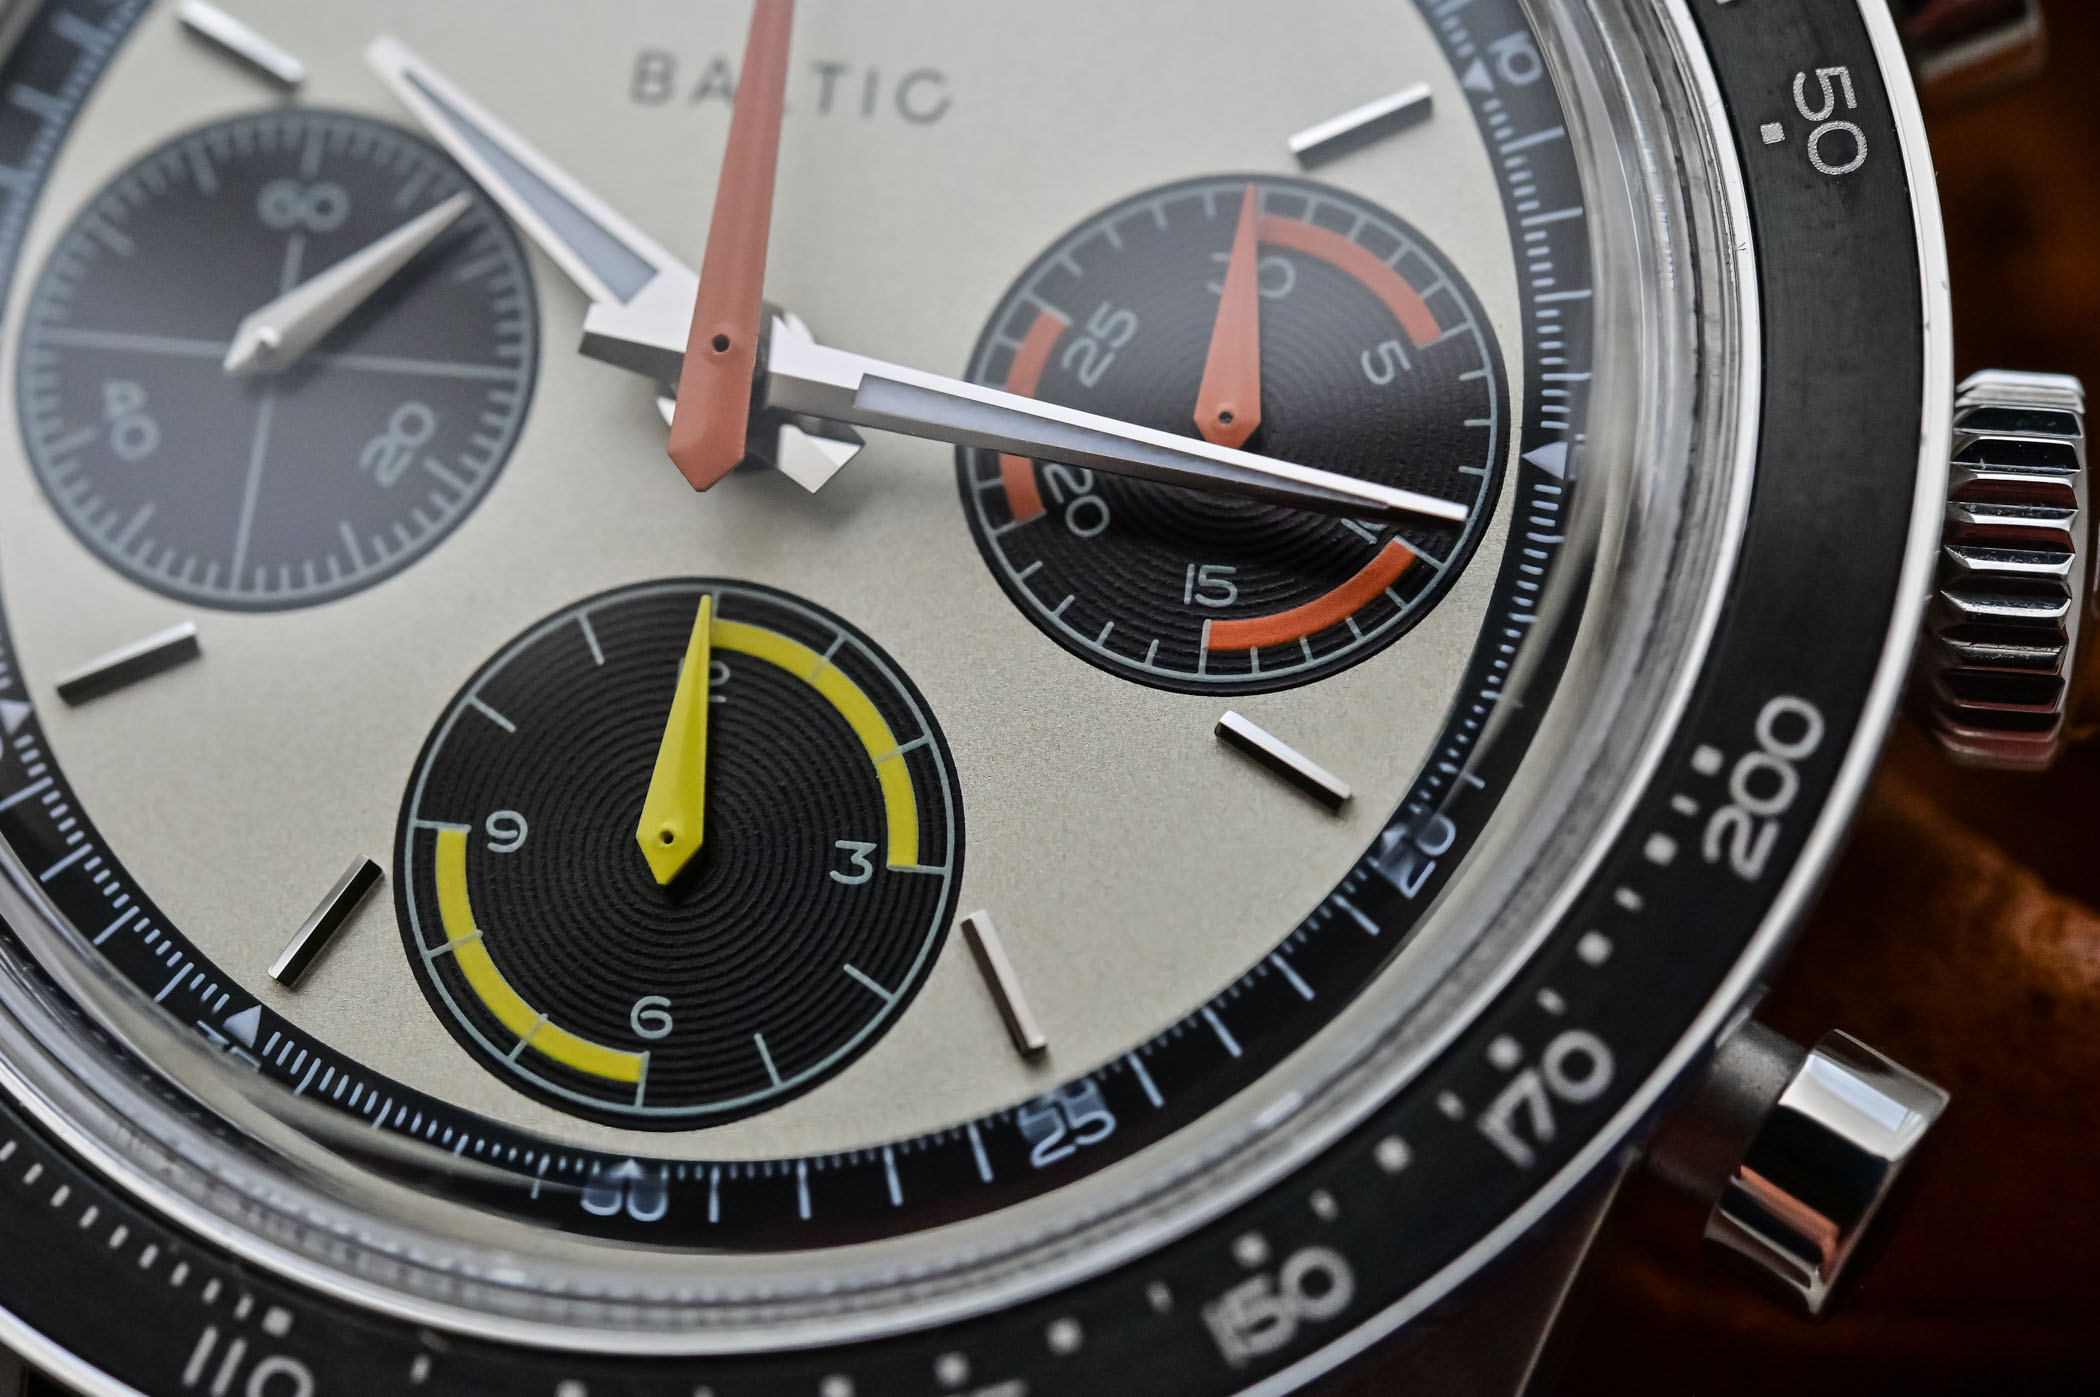 Baltic x Peter Auto Tricompax Chronograph Racing Set